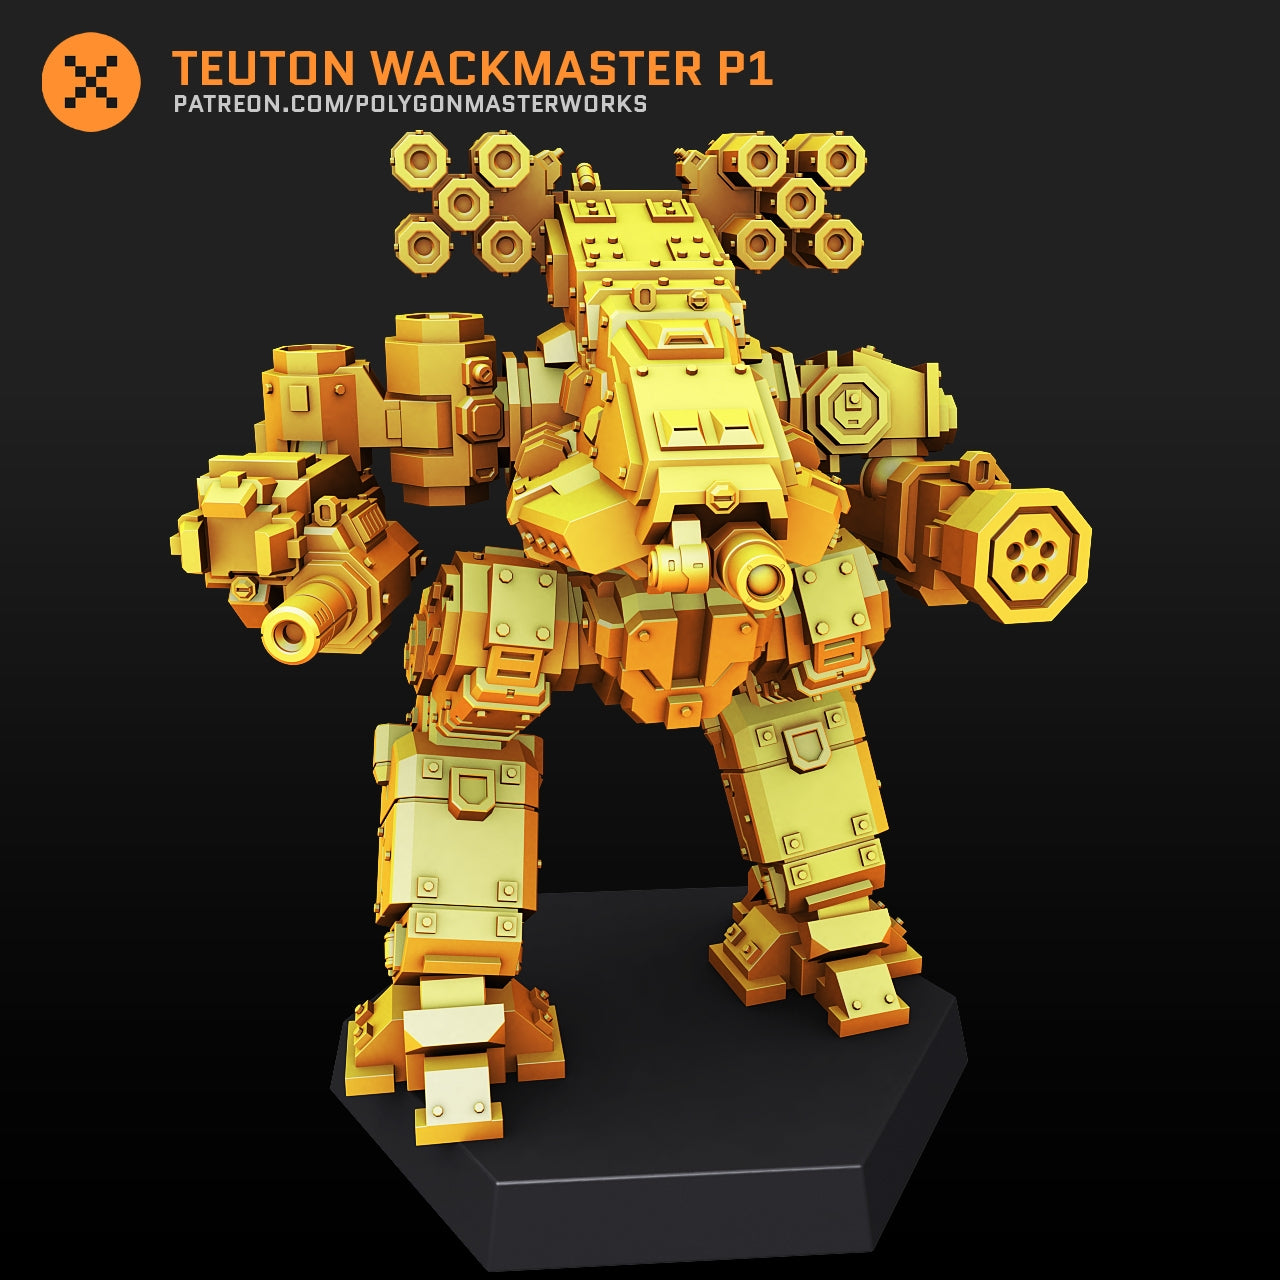 Teuton Wackmaster P1 (By PMW) Alternate Battletech Mechwarrior Miniatures